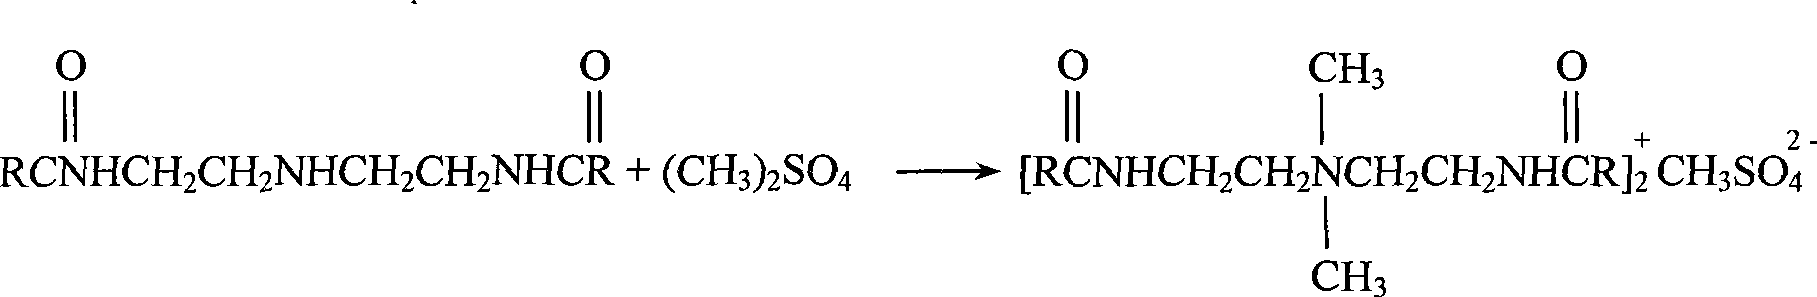 Bisamide quaternary ammonium salt sheet softening agent, preparation and uses thereof